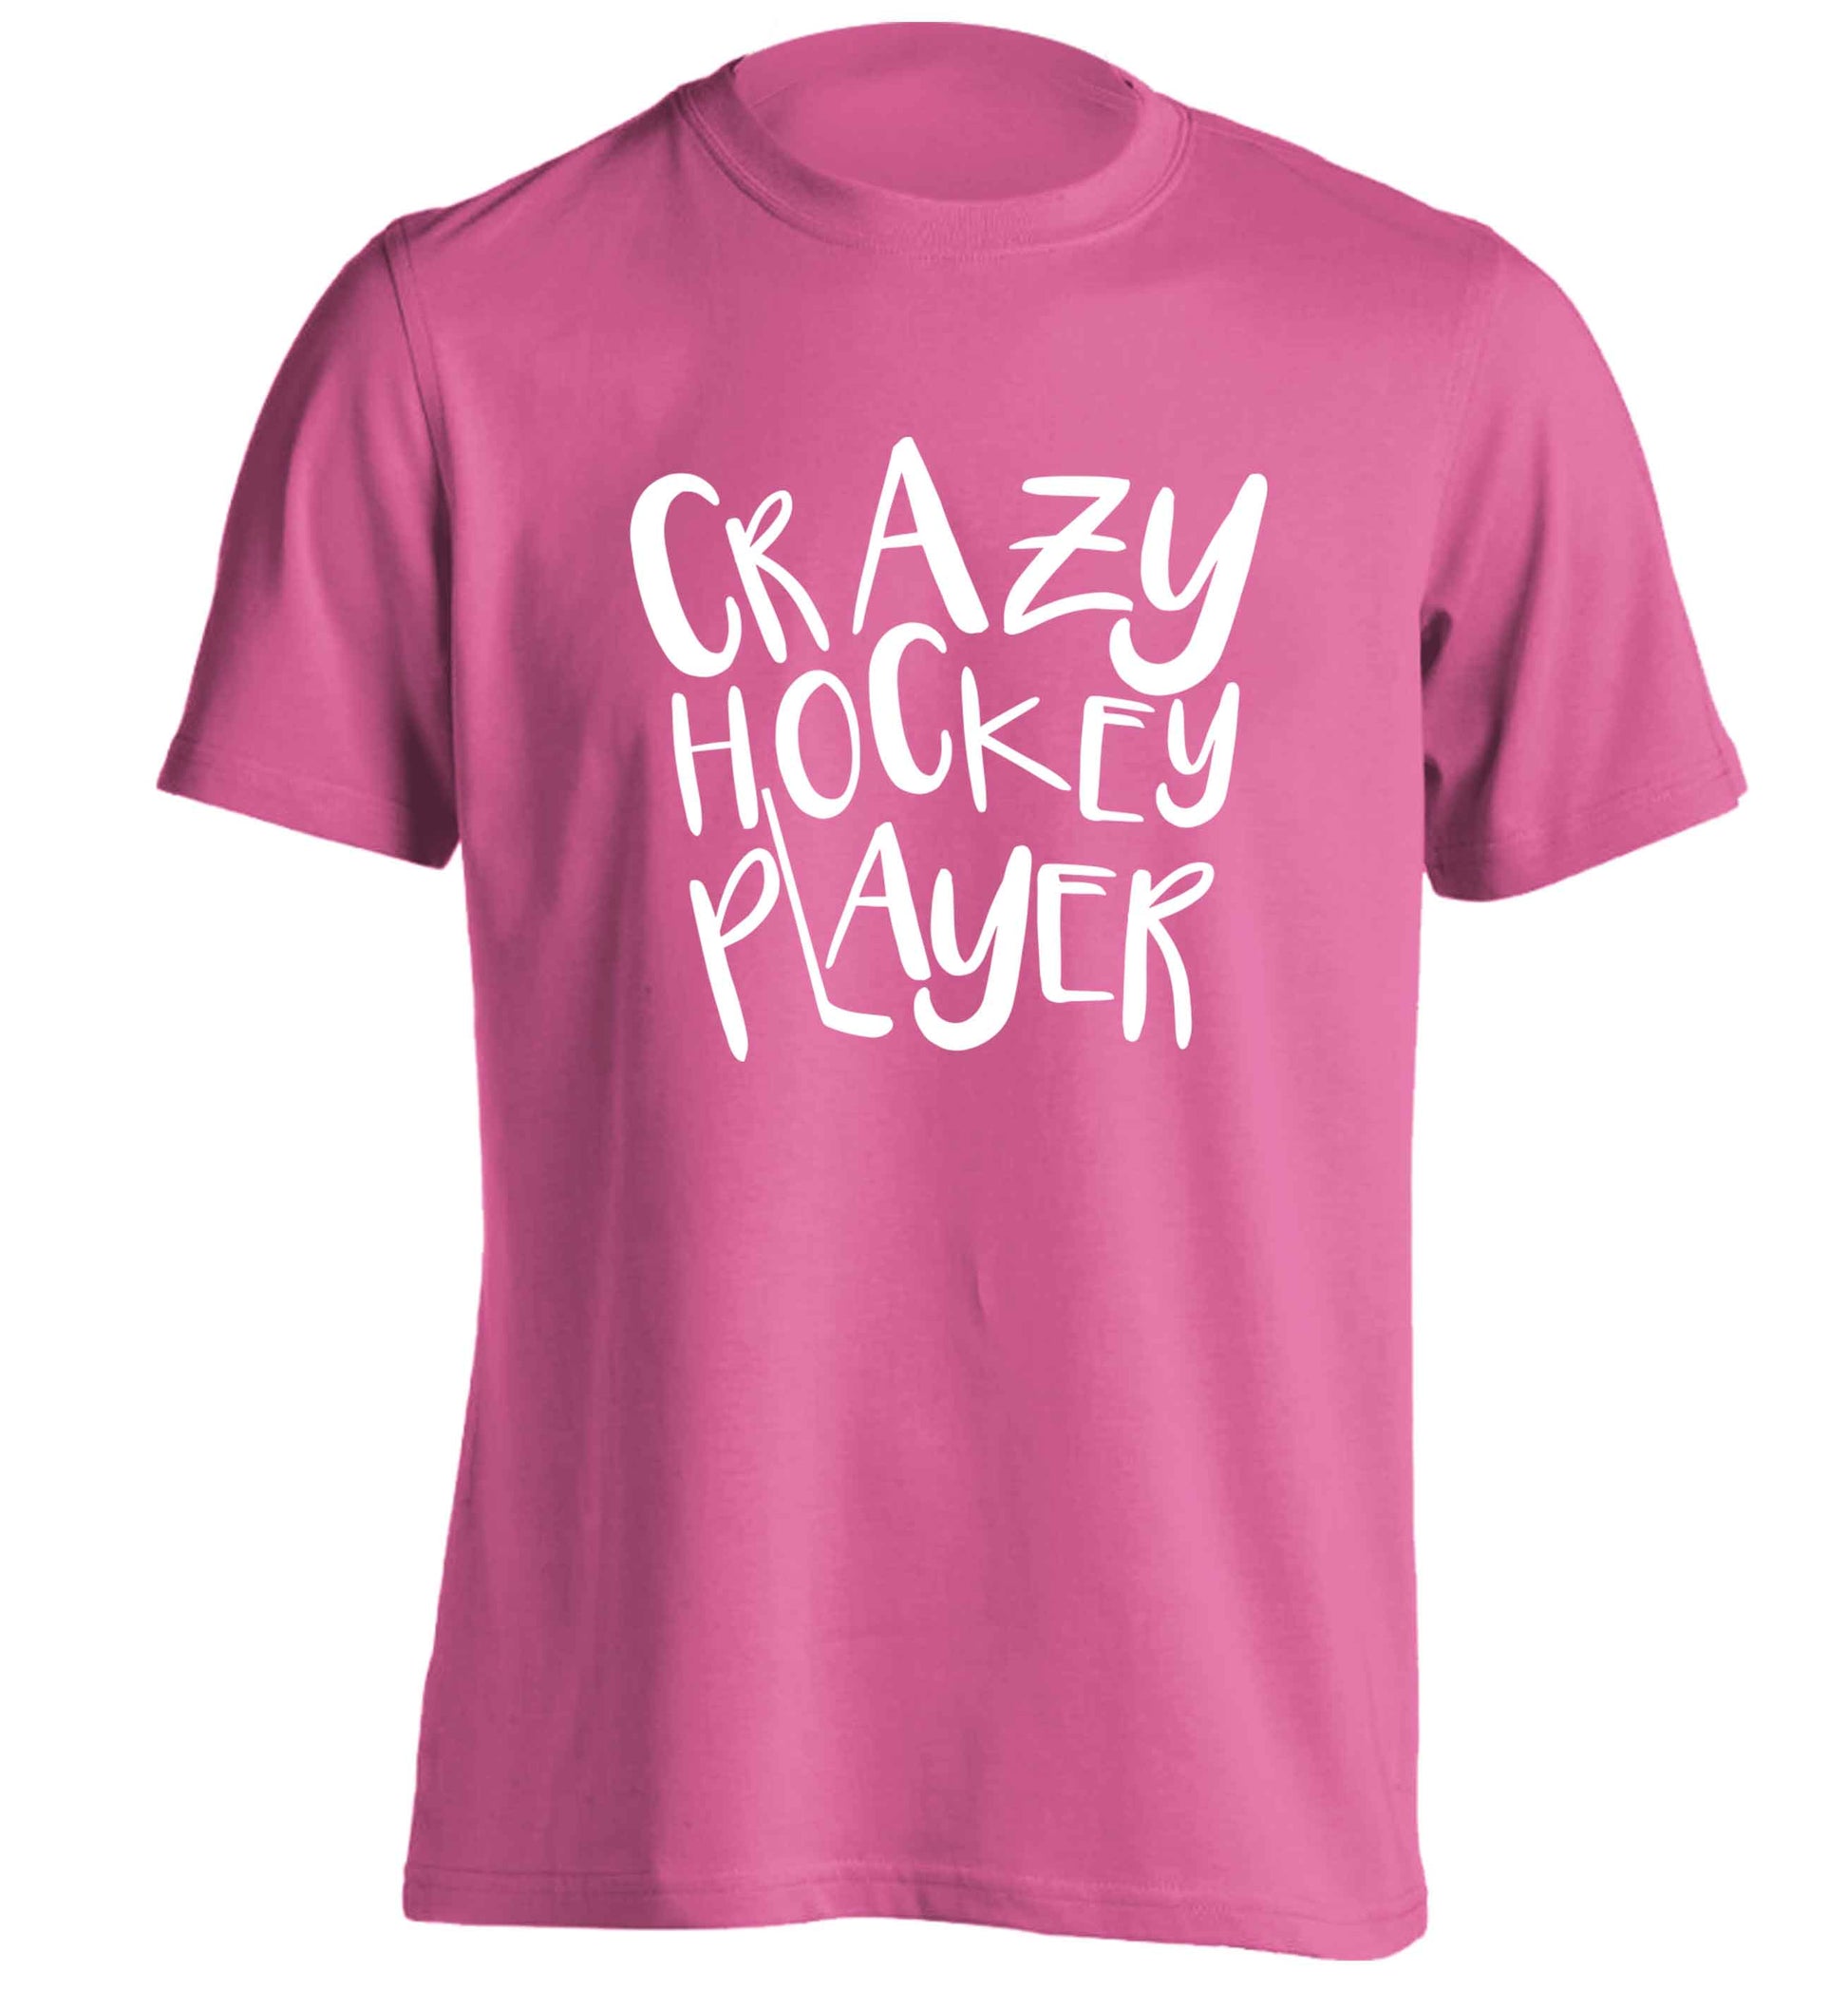 Crazy hockey player adults unisex pink Tshirt 2XL